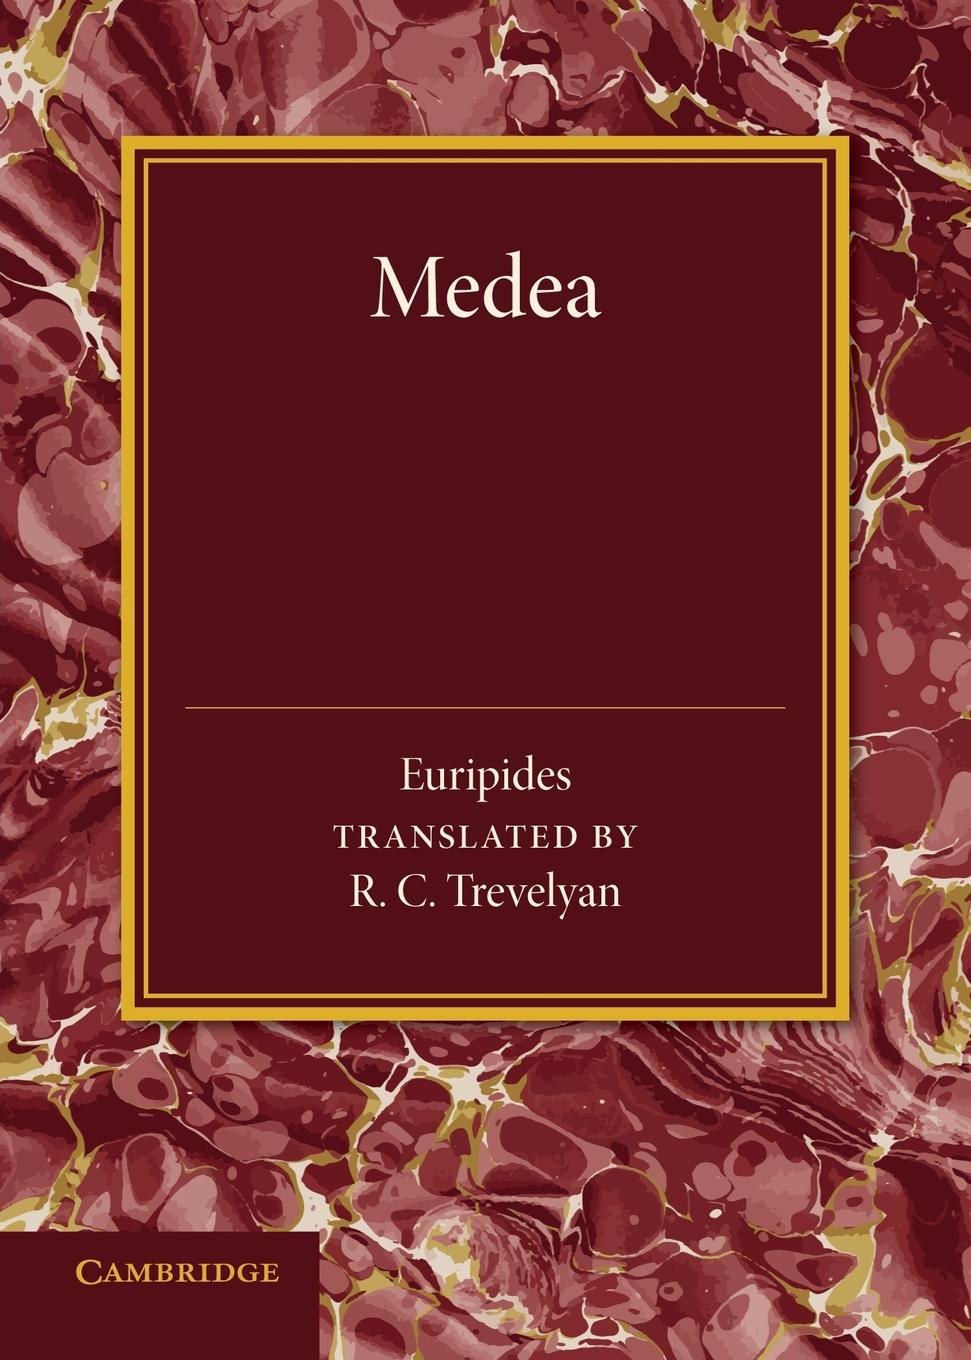 Medea - Euripides